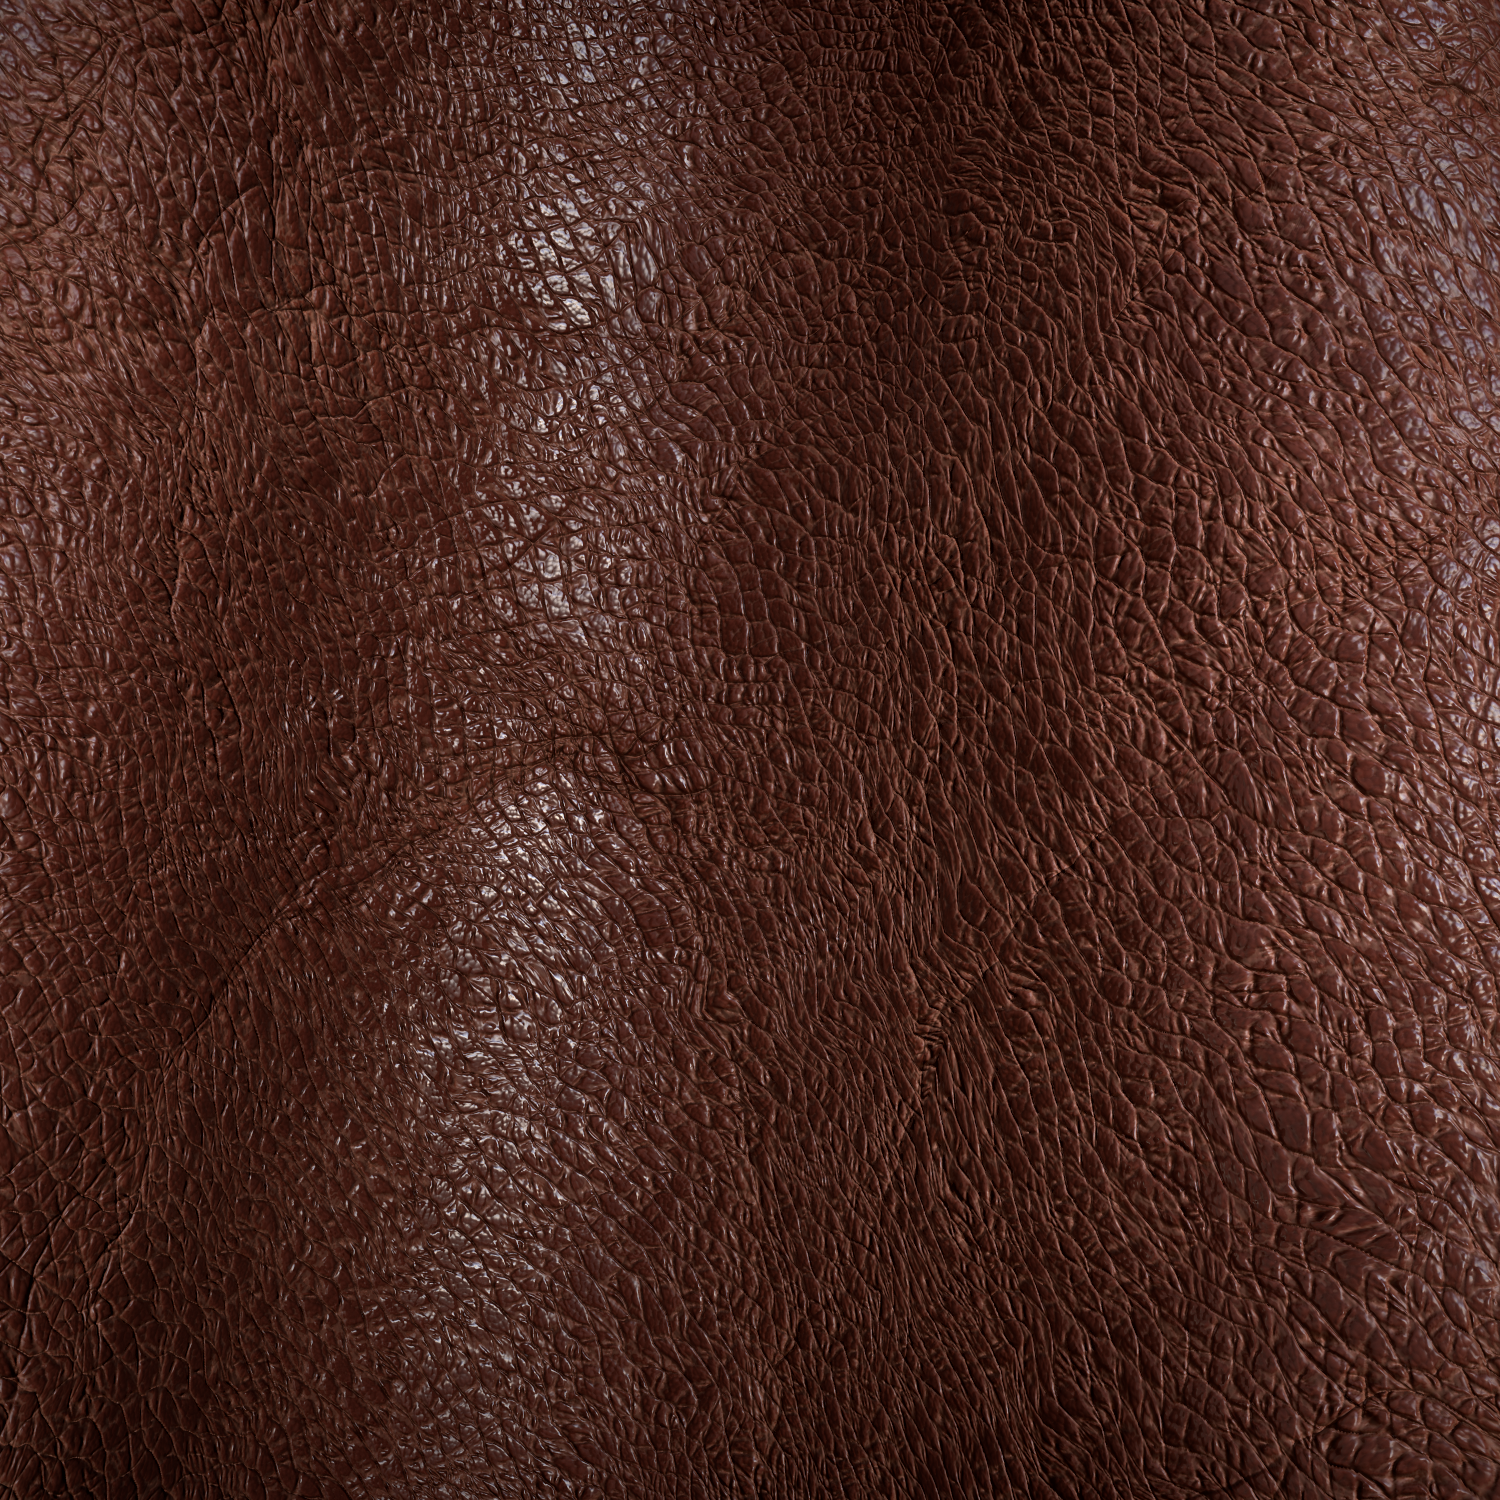 Leather PBR 4k Texture by Valetovskaia